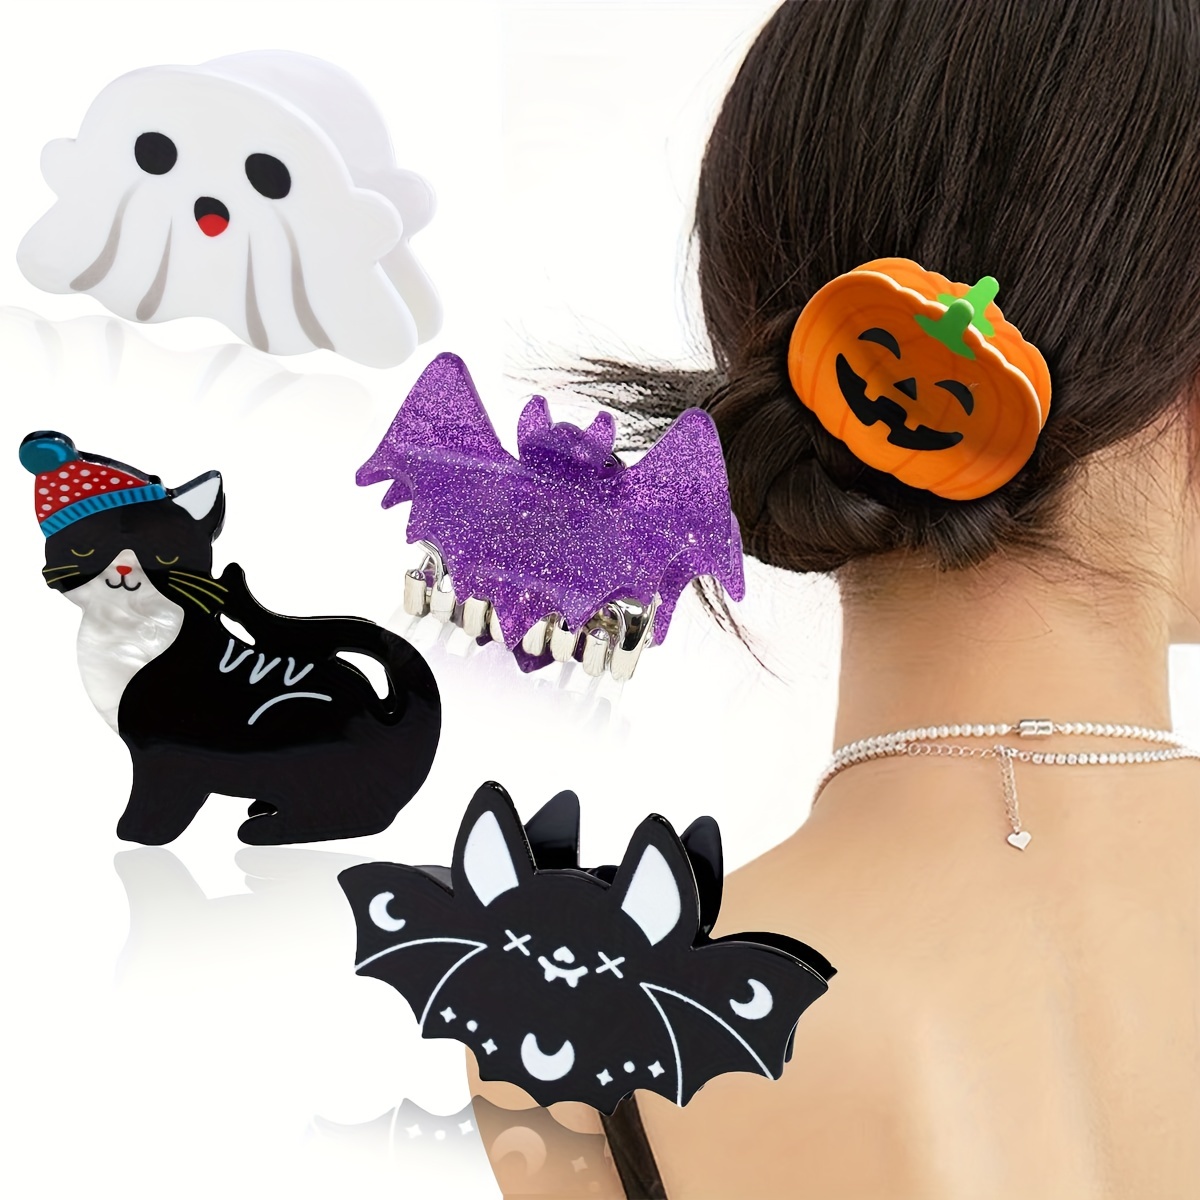 Goth Pumpkin Ghost Spider Skull Halloween Gifts Hairclip Women Men